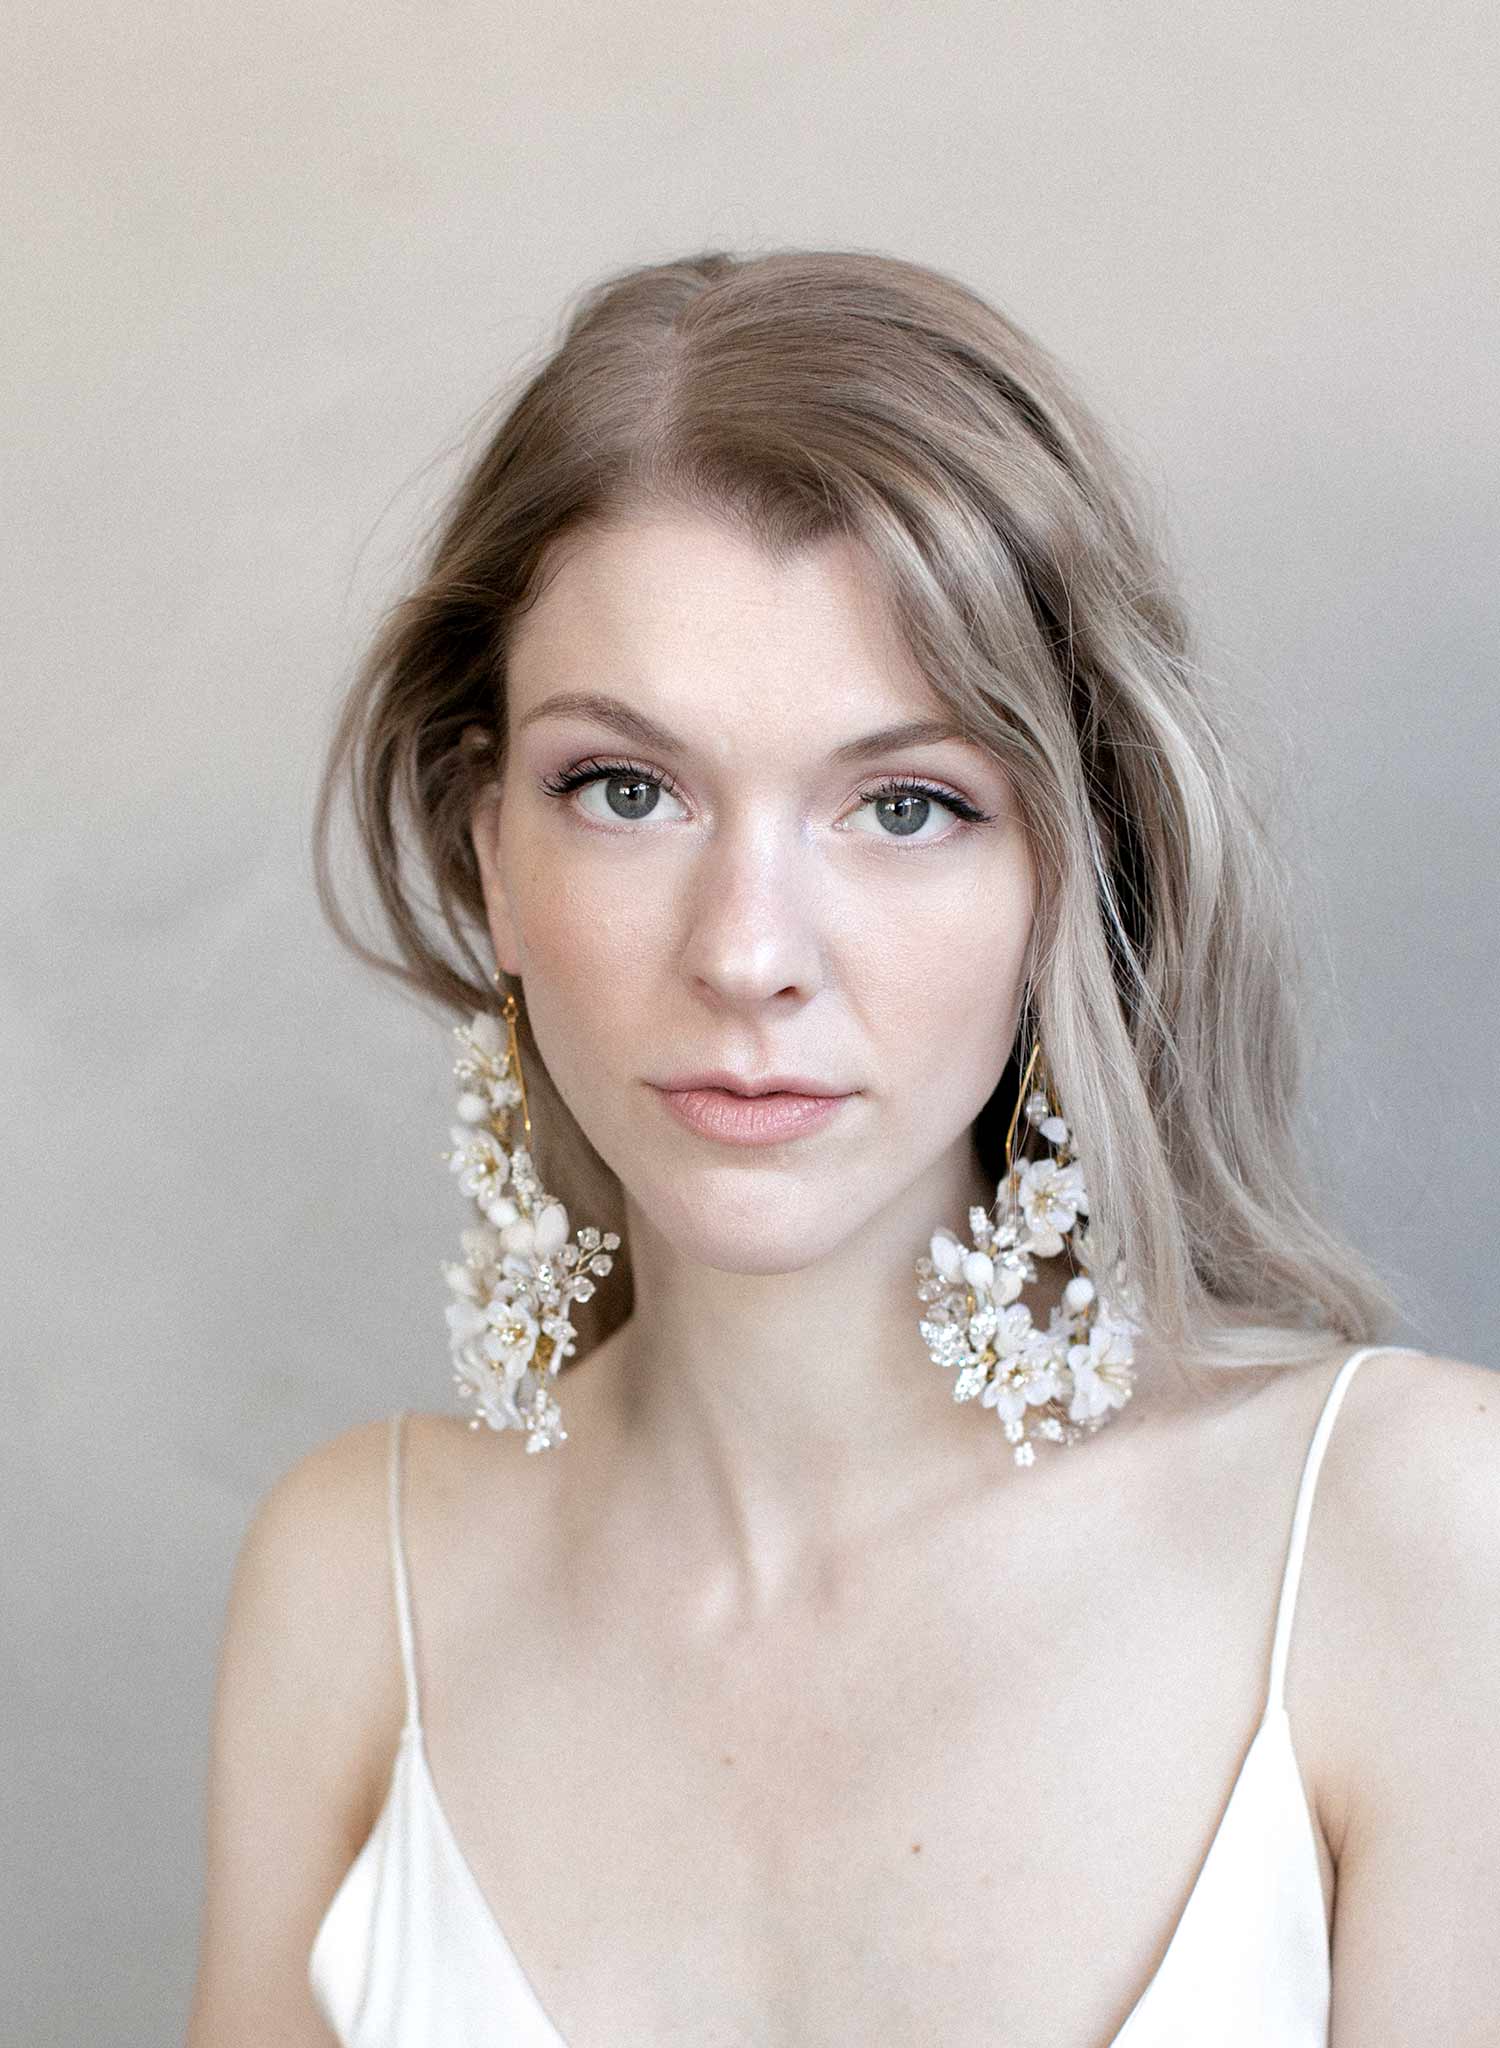 Decadent blossom chandelier earrings - Style #949